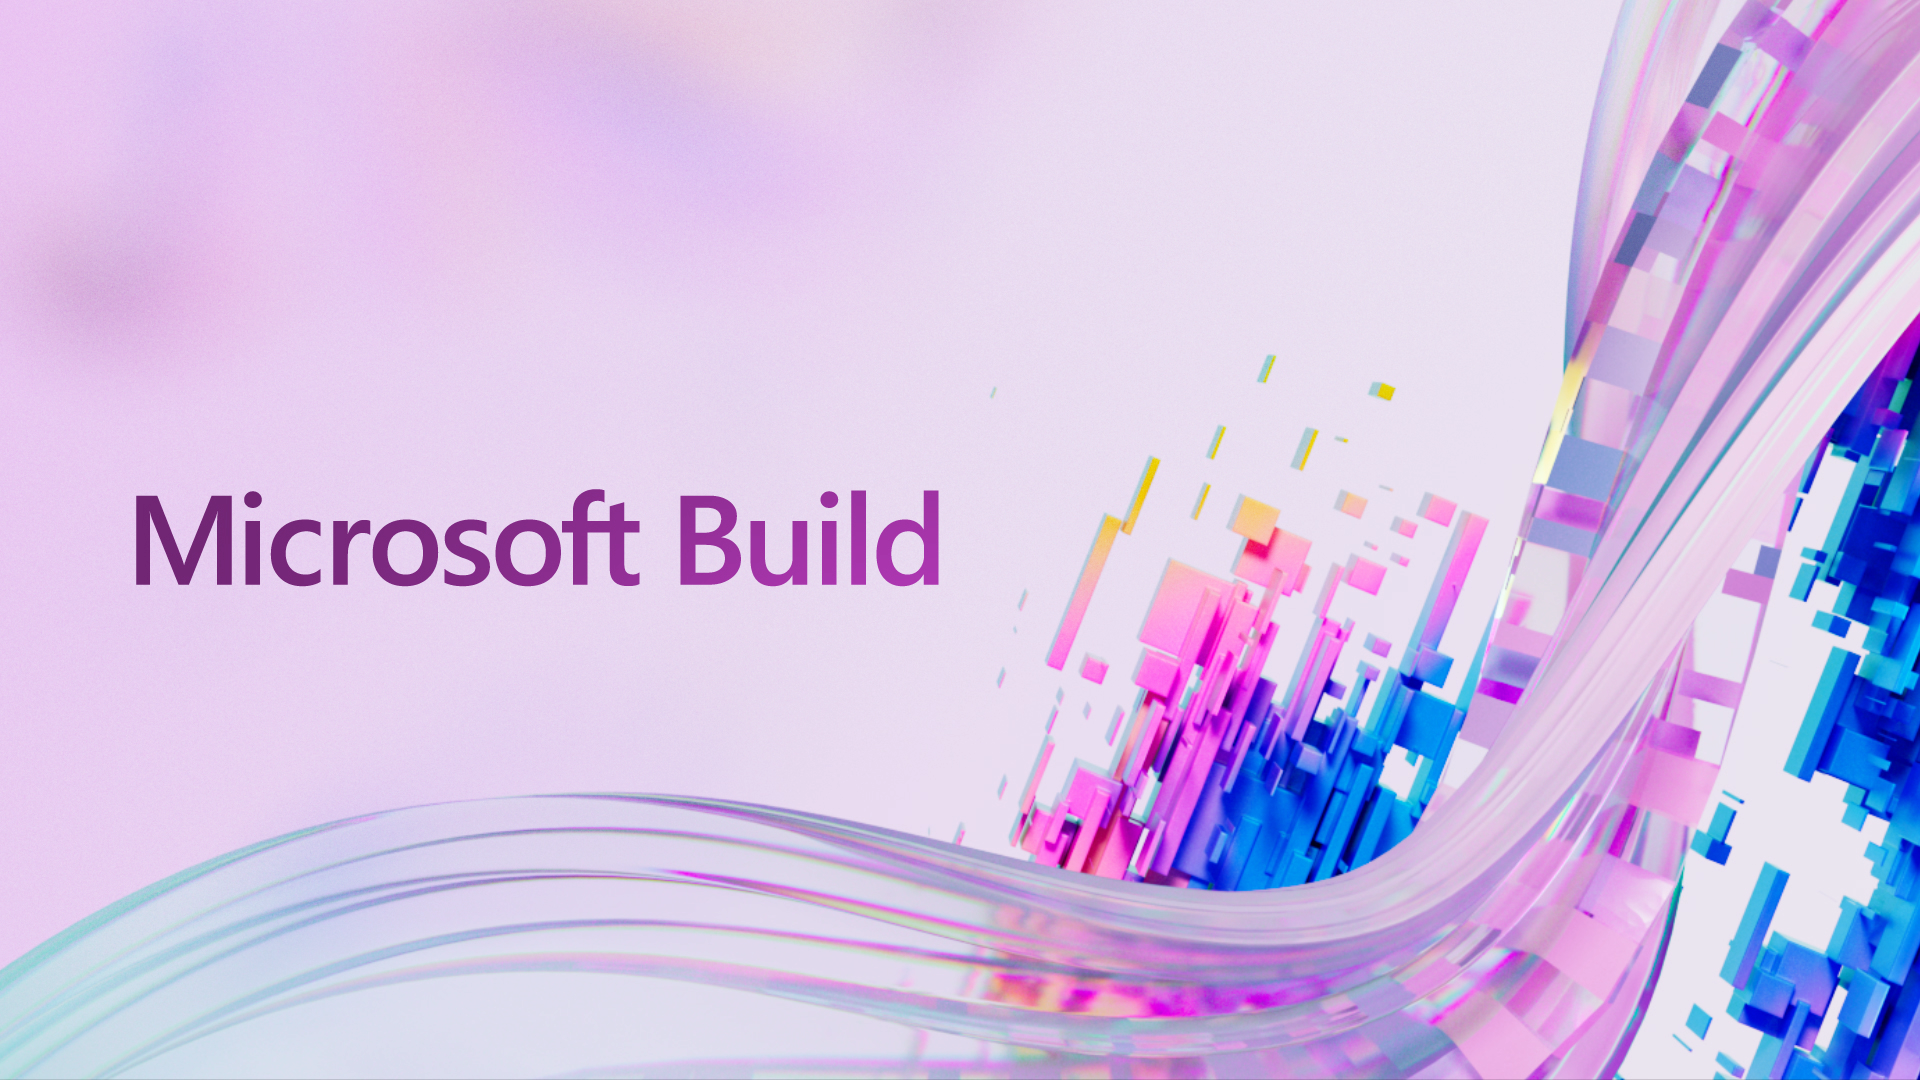 Microsoft Build illustration